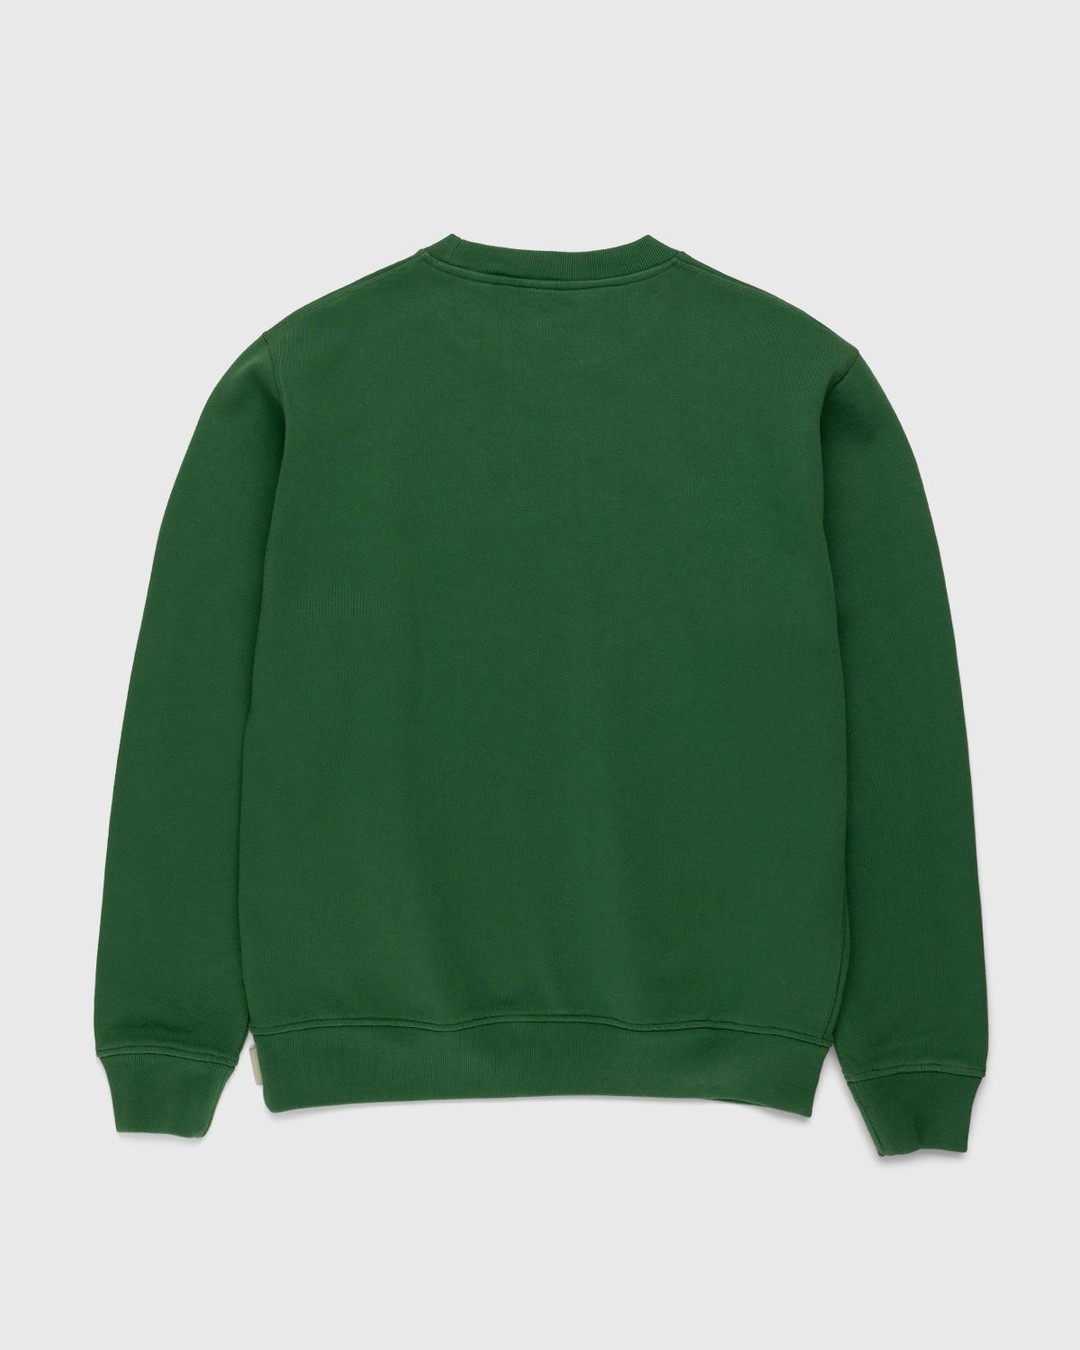 Highsnobiety – Staples Crew Green - Sweatshirts - Green - Image 2